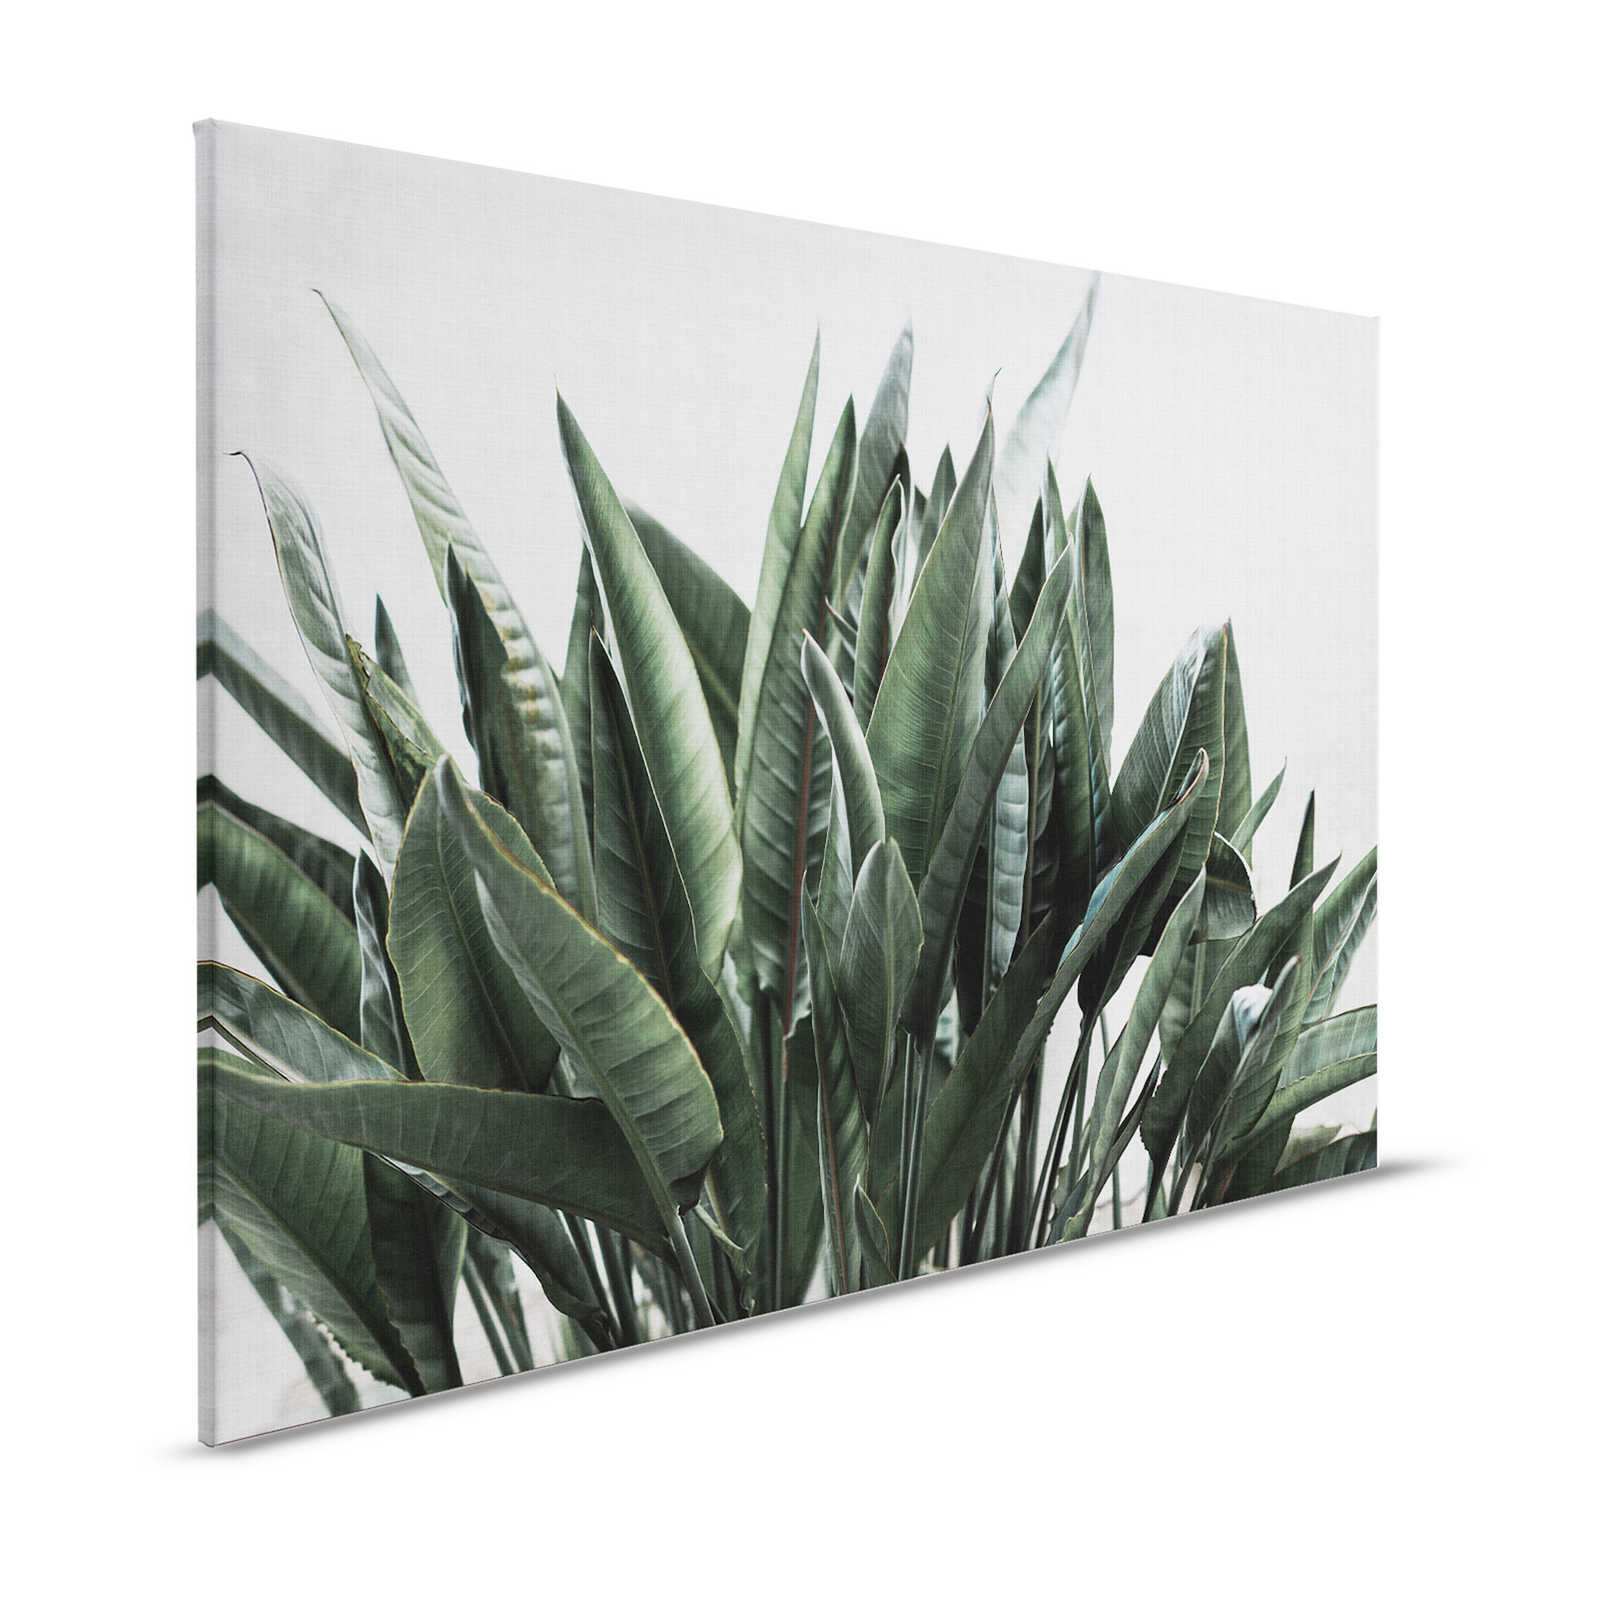 Urban jungle 2 - Palm leaves canvas picture, natural linen structure exotic plants - 1.20 m x 0.80 m
